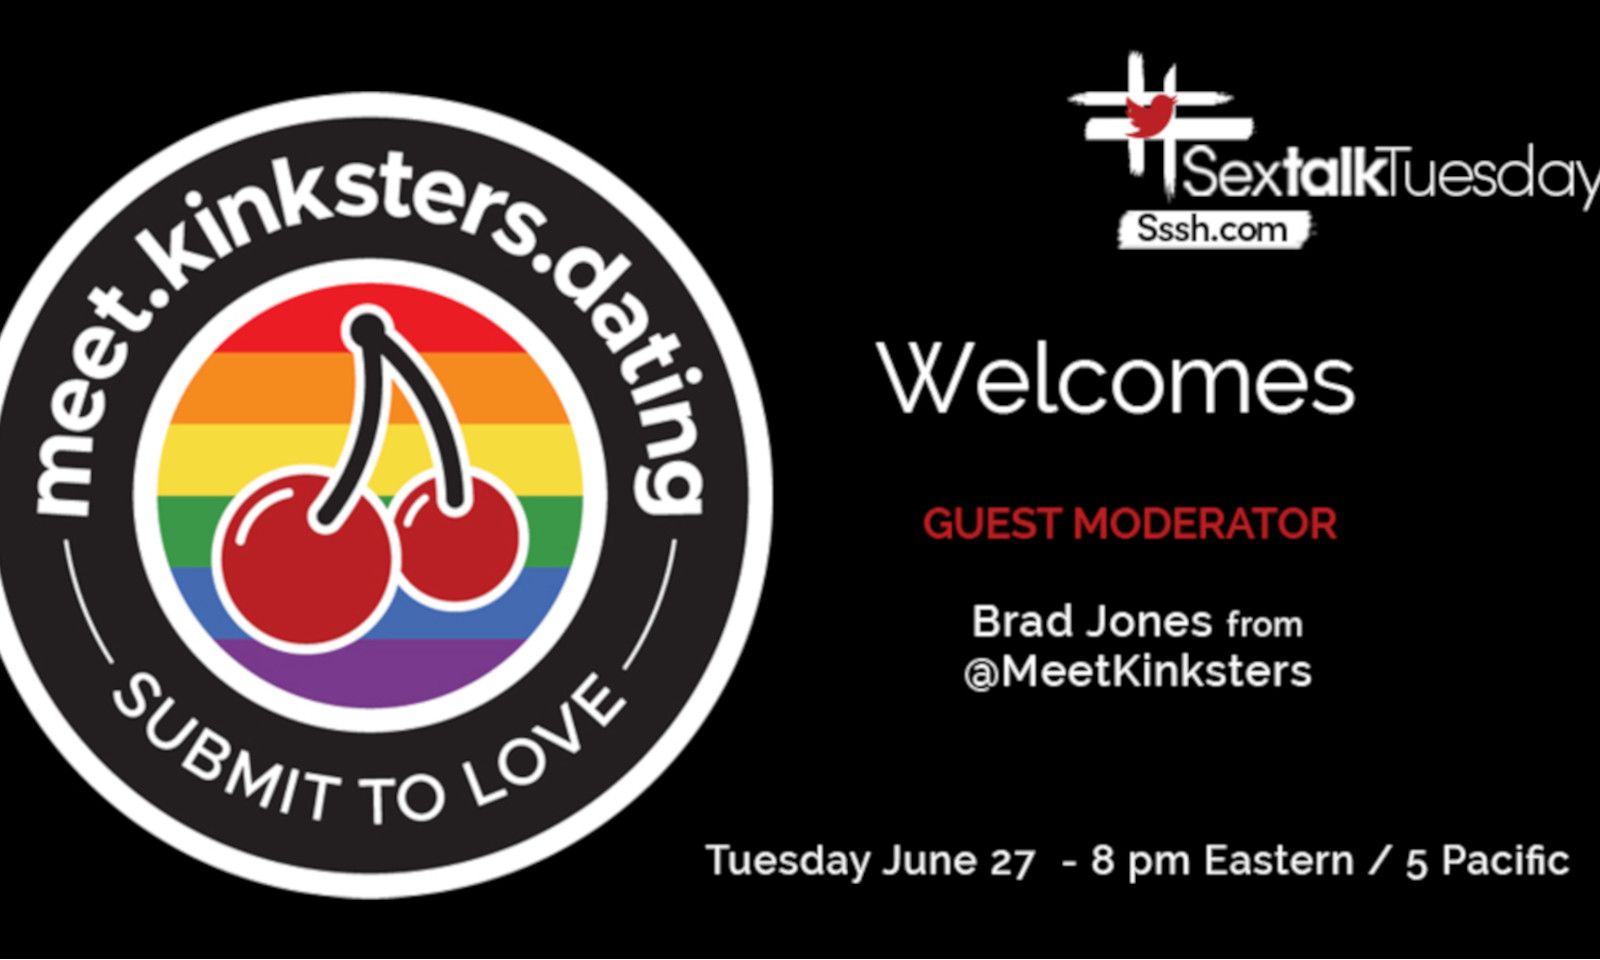 MeetKinksters' Brad Jones to Join 'SexTalkTuesday'